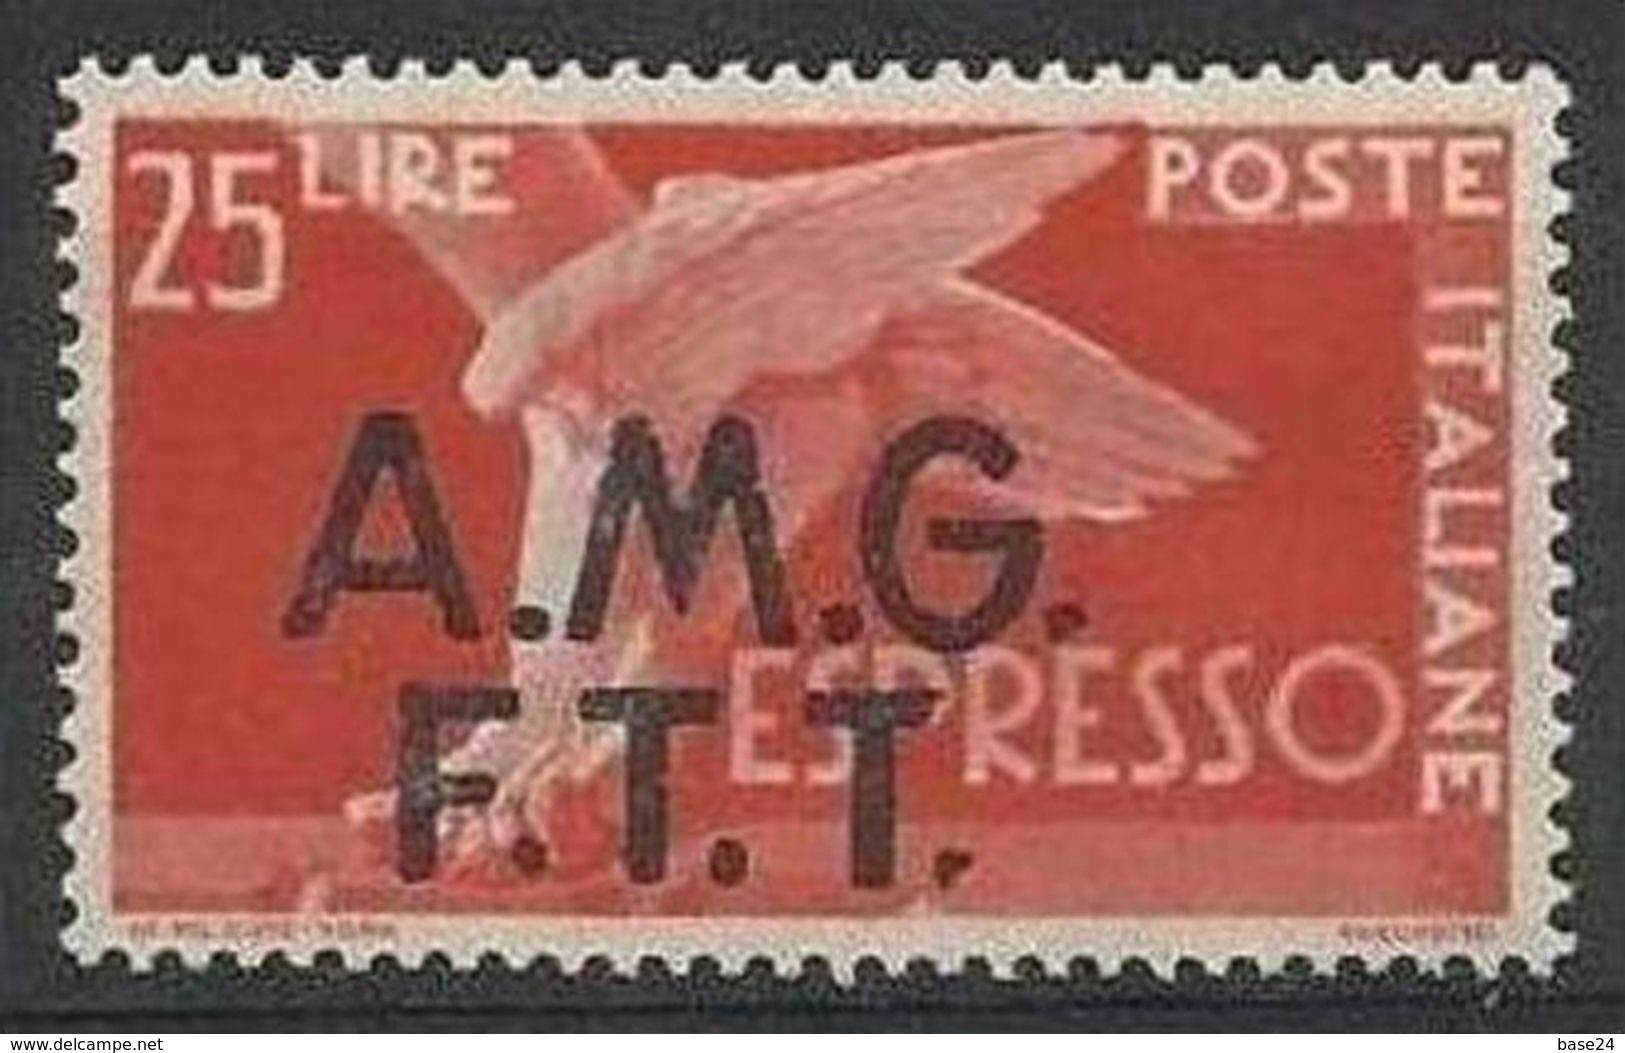 1947 Italia Italy Trieste A ESPRESSO - EXPRESS 25L Espressi Democratica MNH** - Eilsendung (Eilpost)